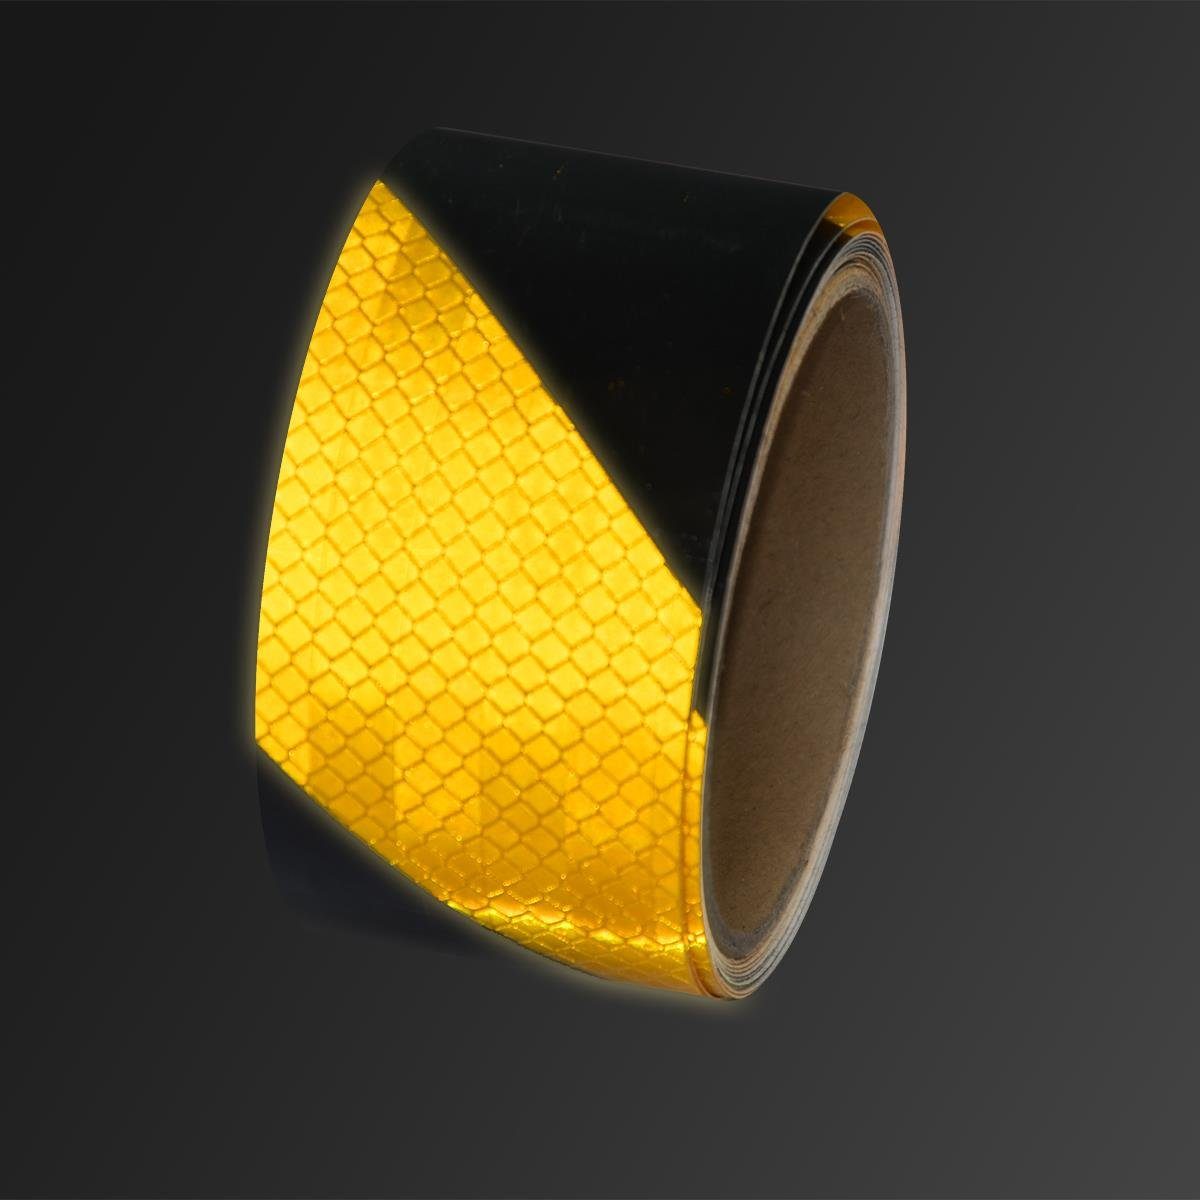 eyepower Klebeband Schwarz-Gelb Warnklebeband 5cmx3m Reflektierendes Reflektorband Signalband